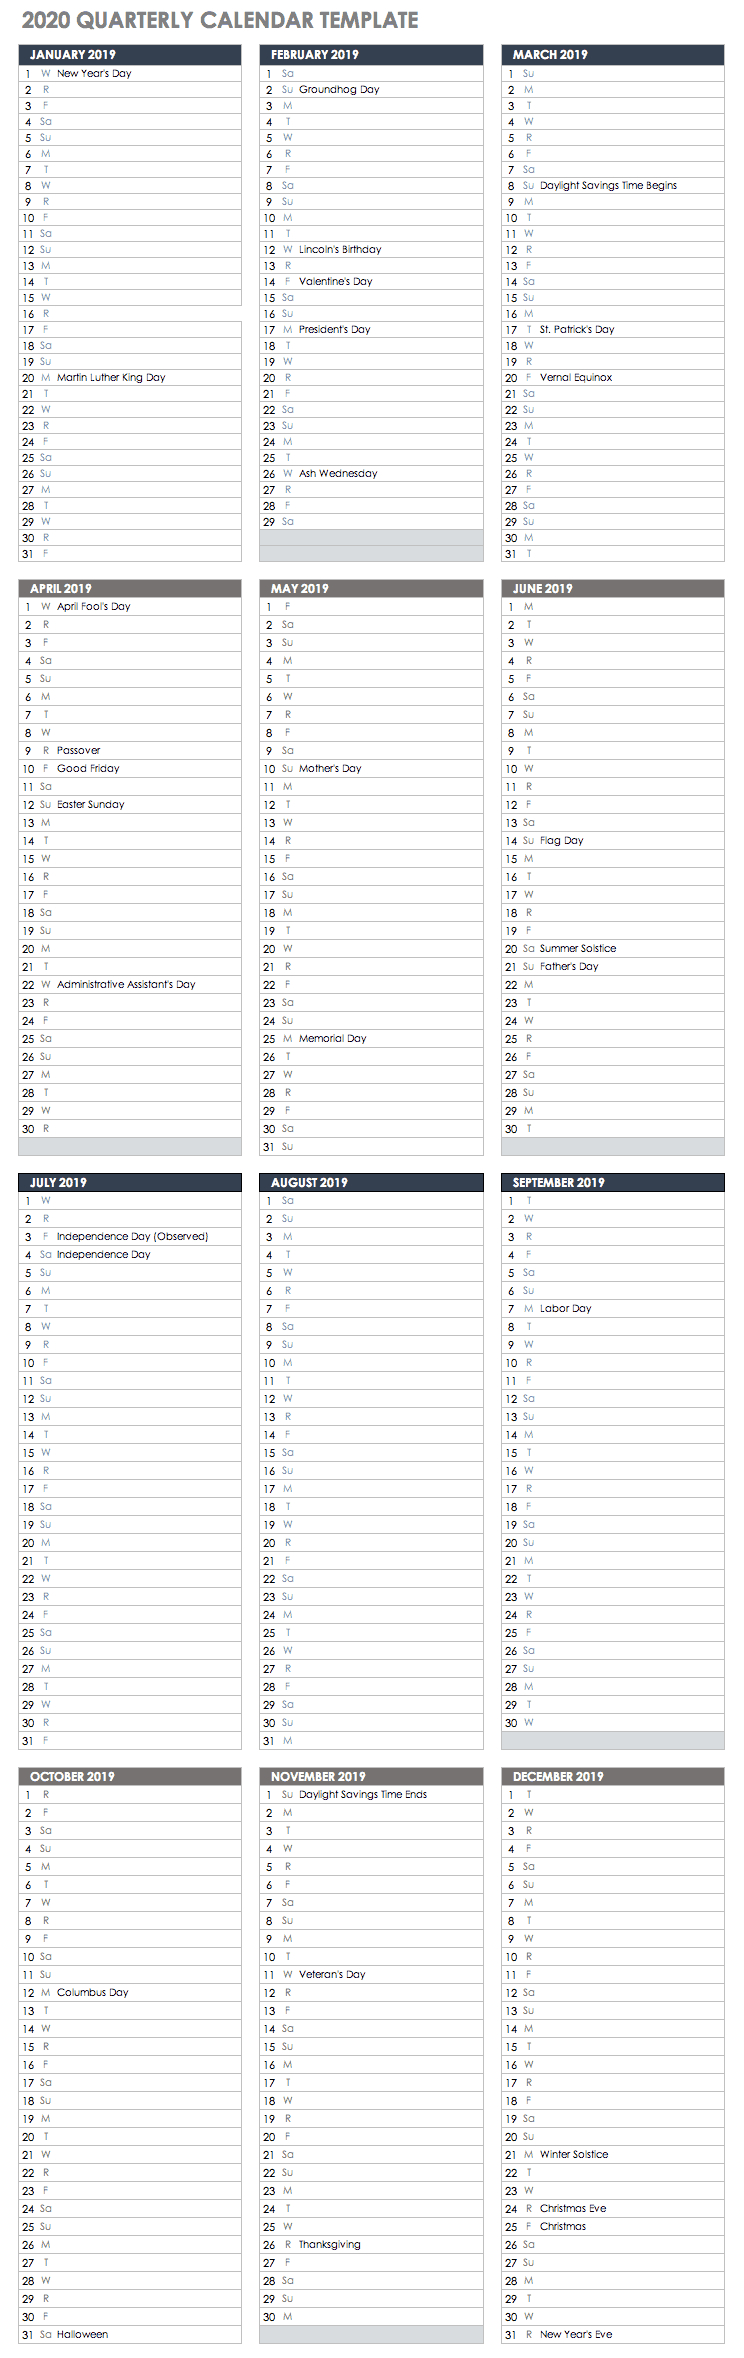 036 Template Ideas Ic Quarterly Calendar Biweekly Payroll inside Excel Quarterly Calendar